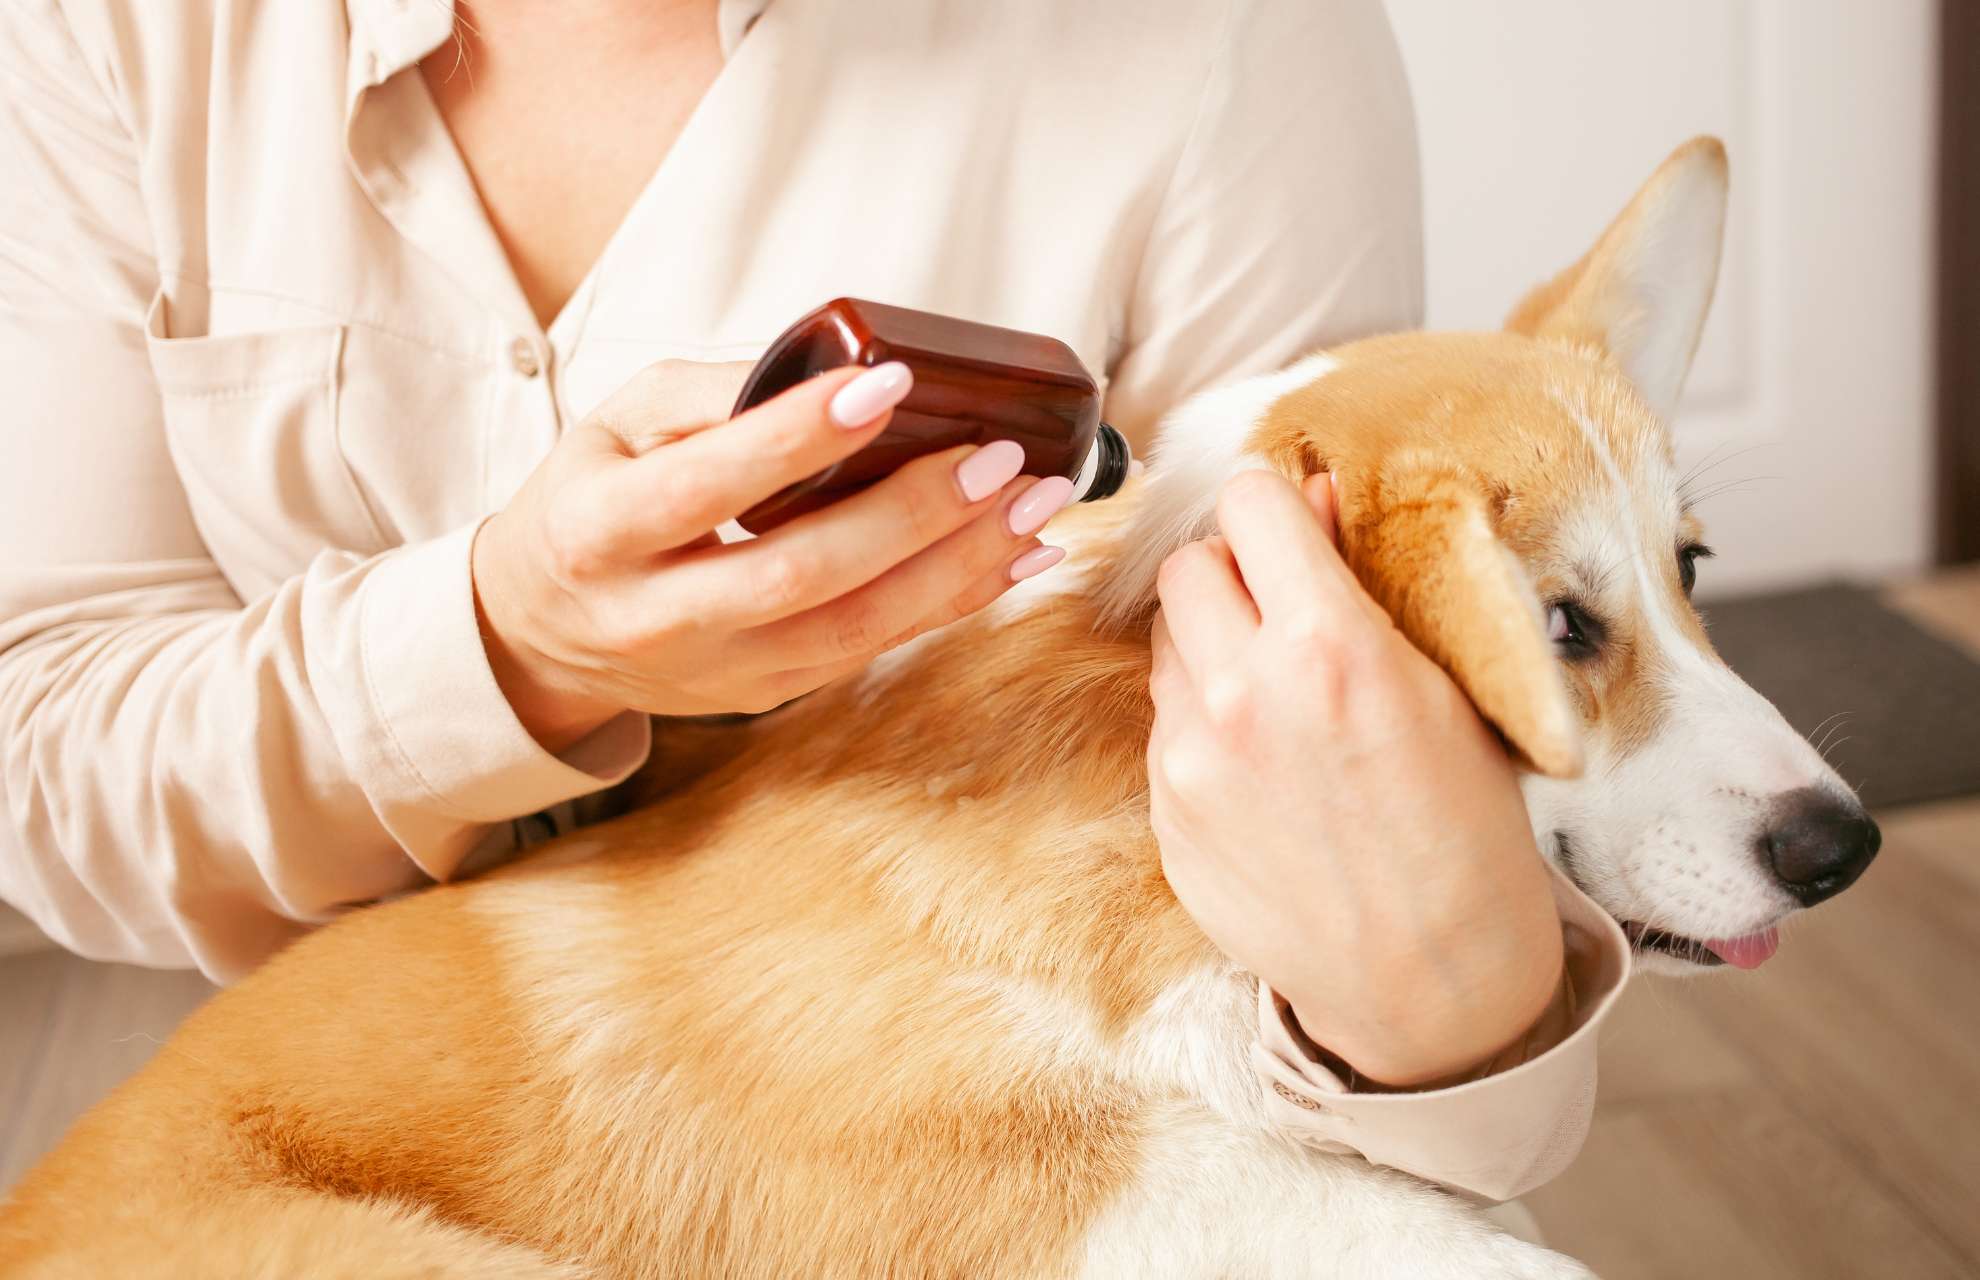 woman applying medicines on her dog's skin